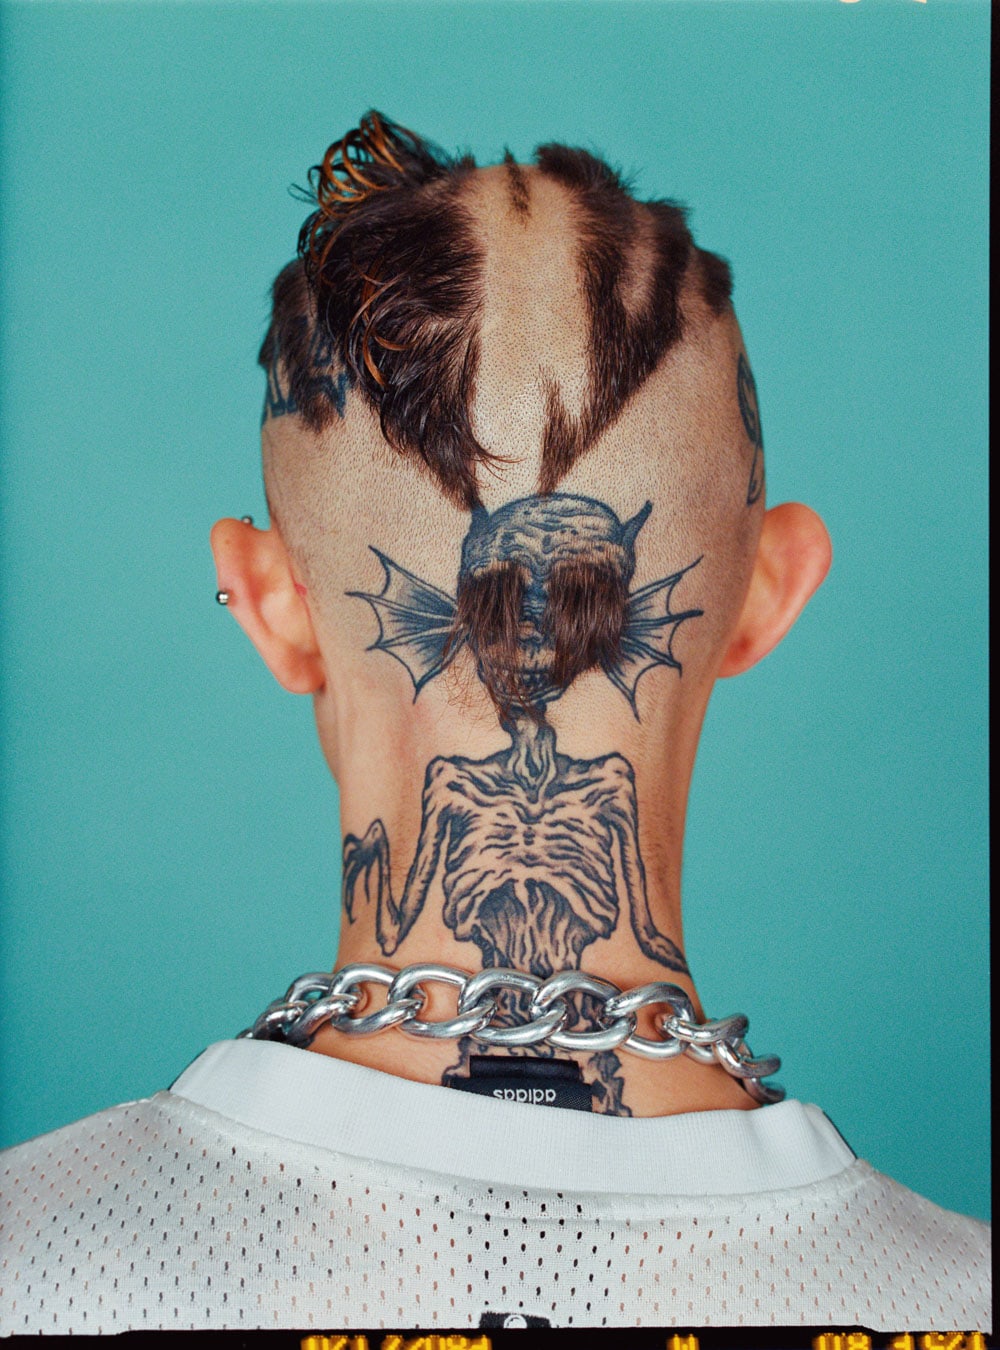 Cult Status Tattoo (tenjei) - Profile | Pinterest